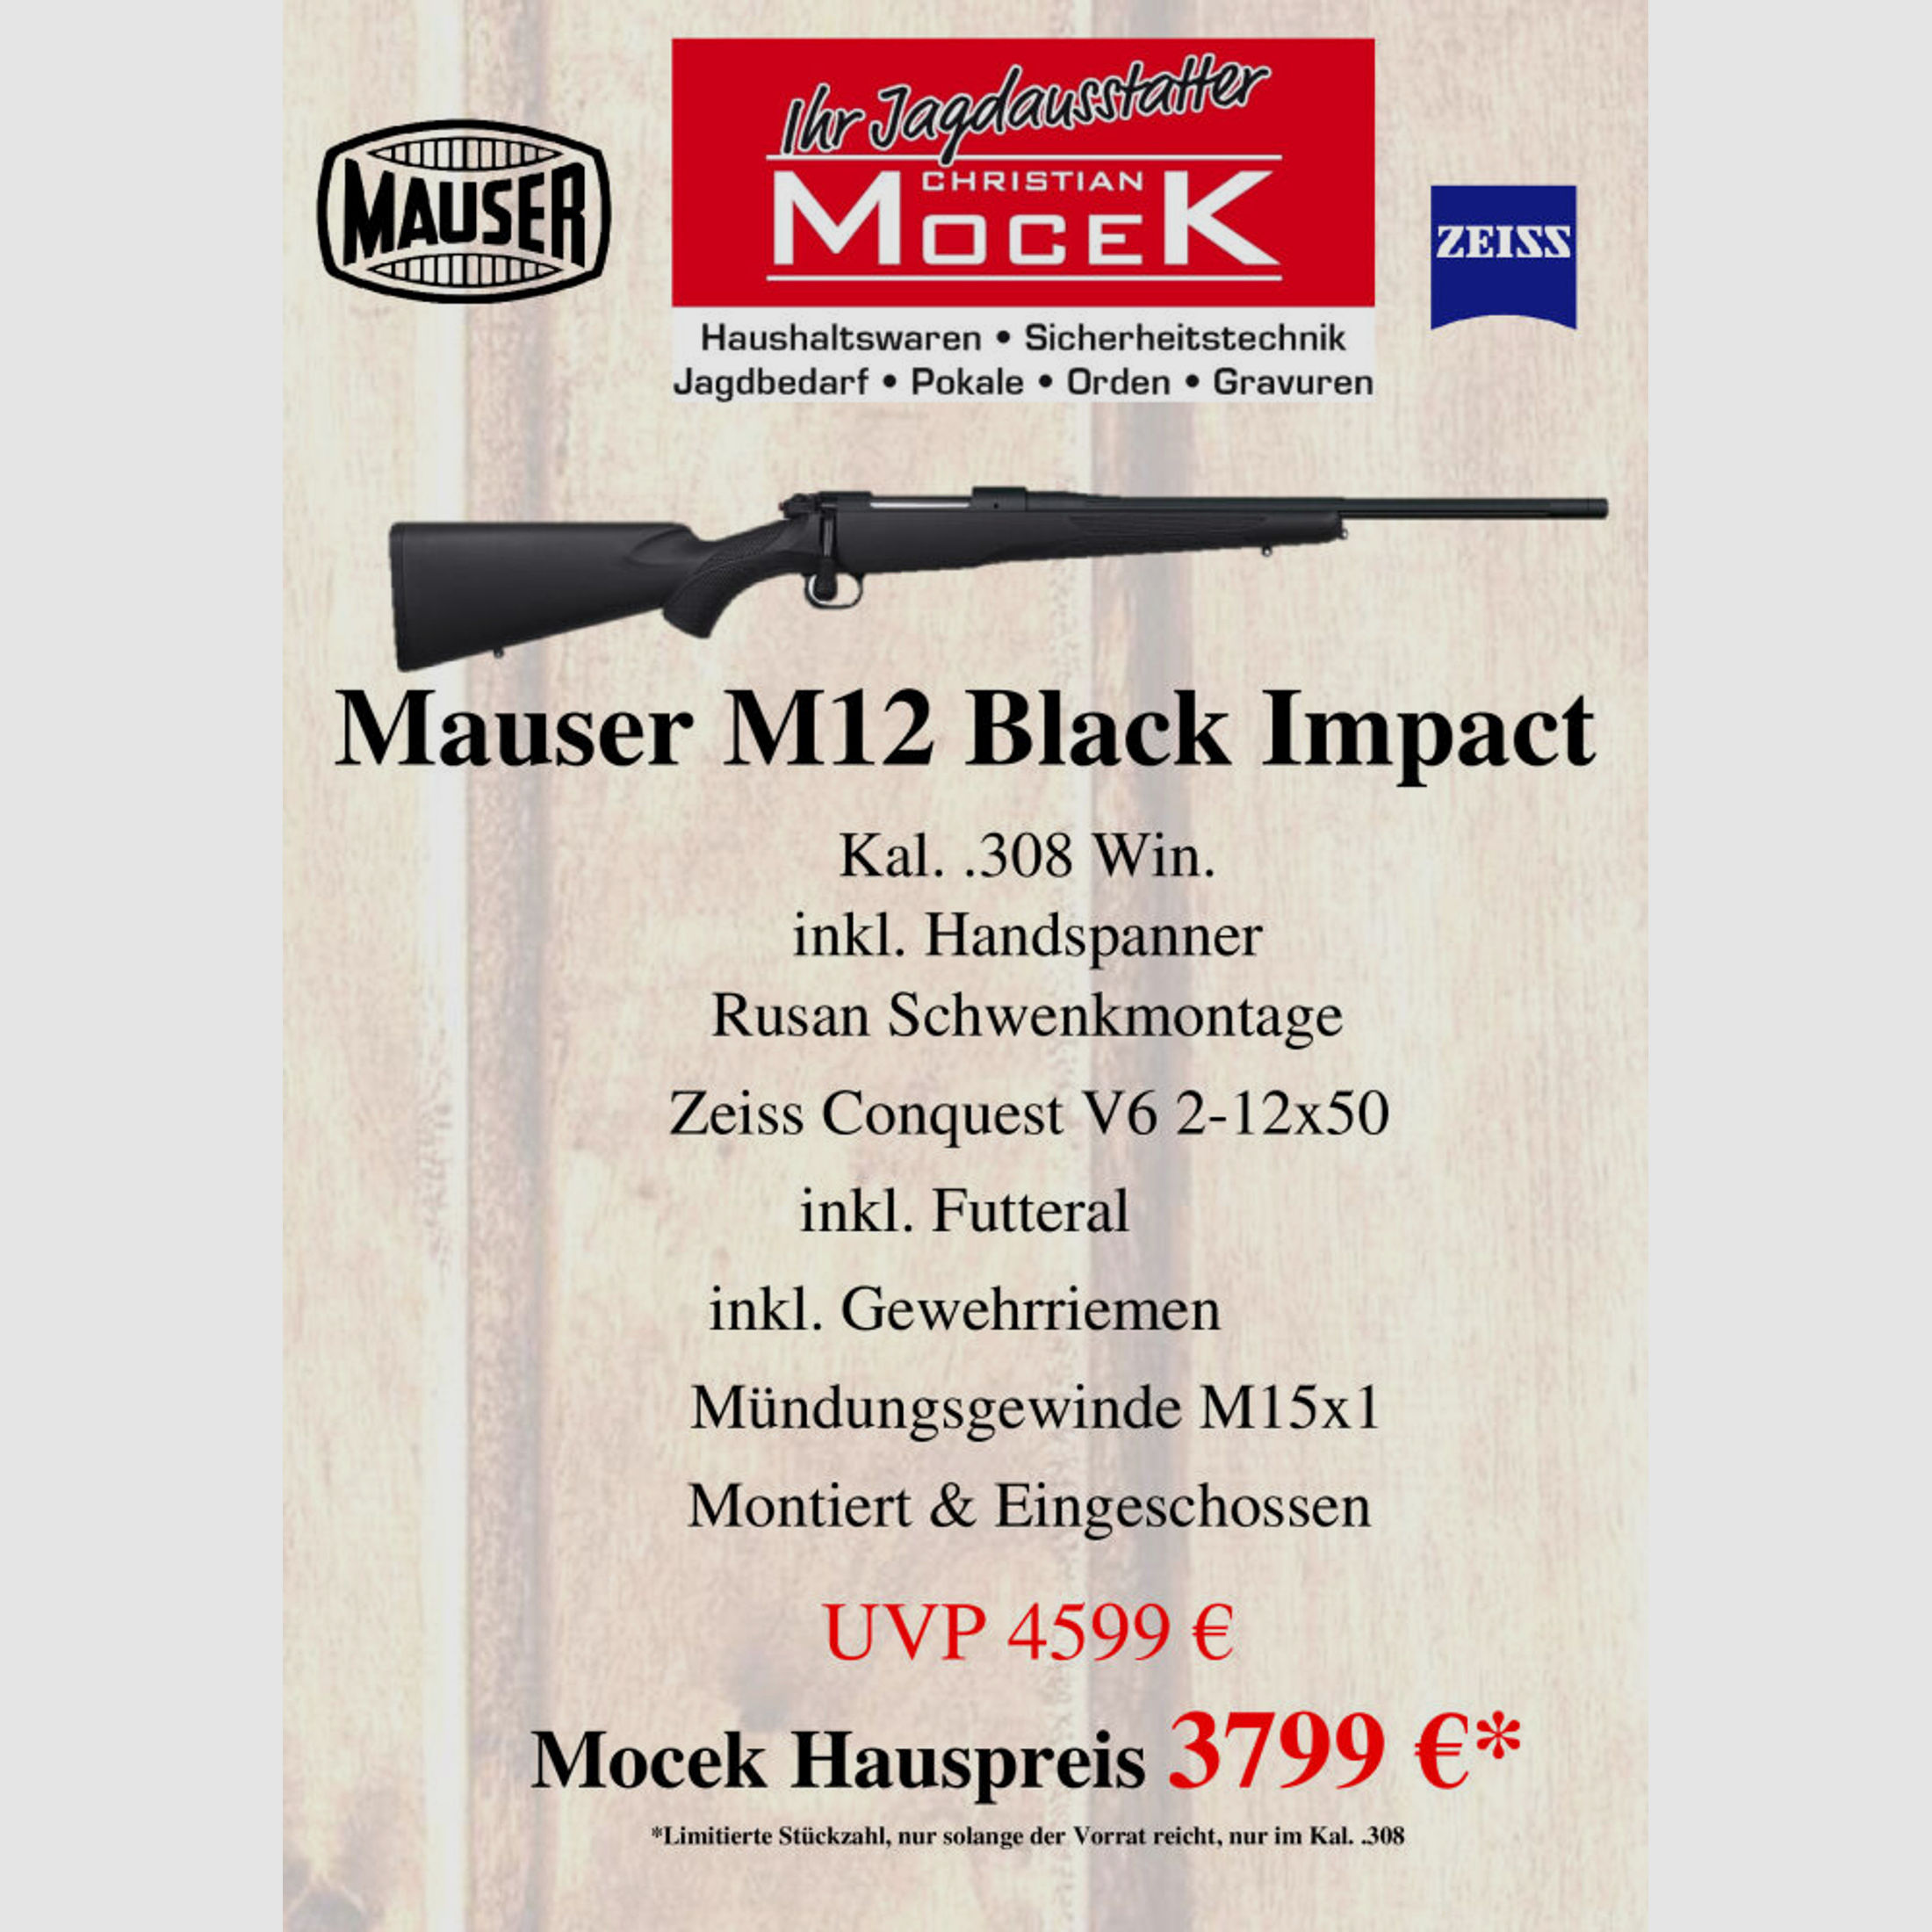 Mauser	 M12 Black Impact, mit Zeiss Conquest V6 2-12x50